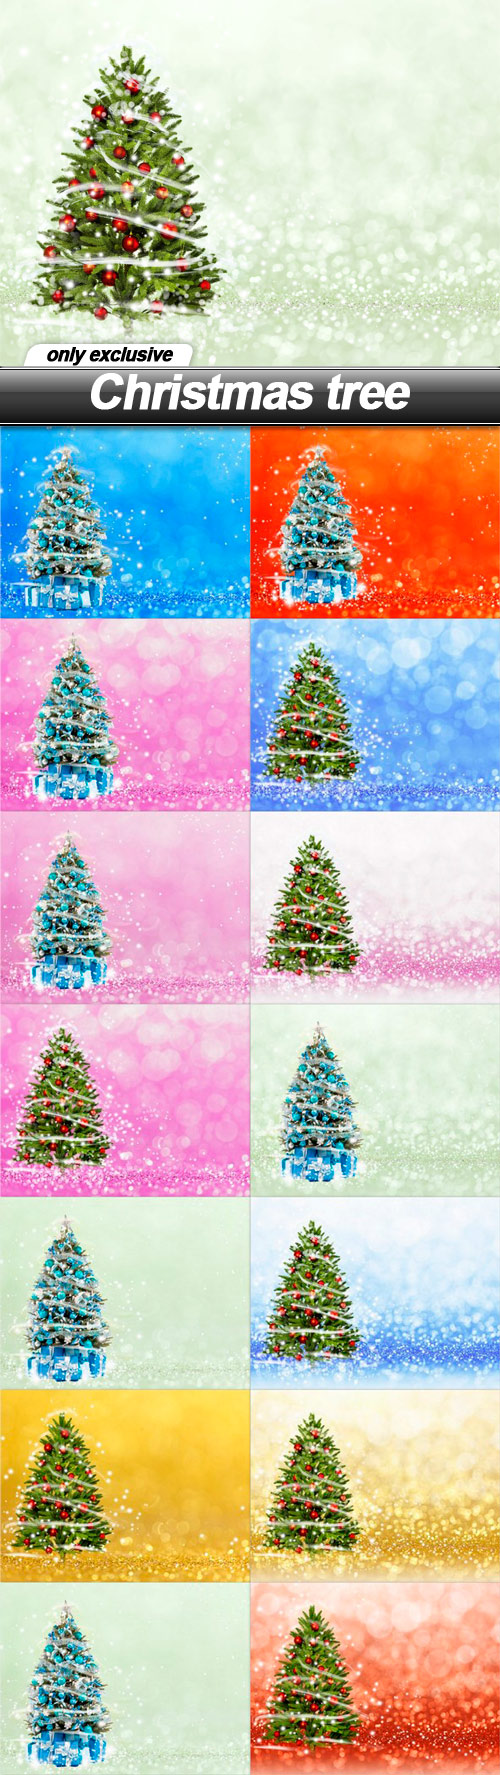 Christmas tree - 15 UHQ JPEG